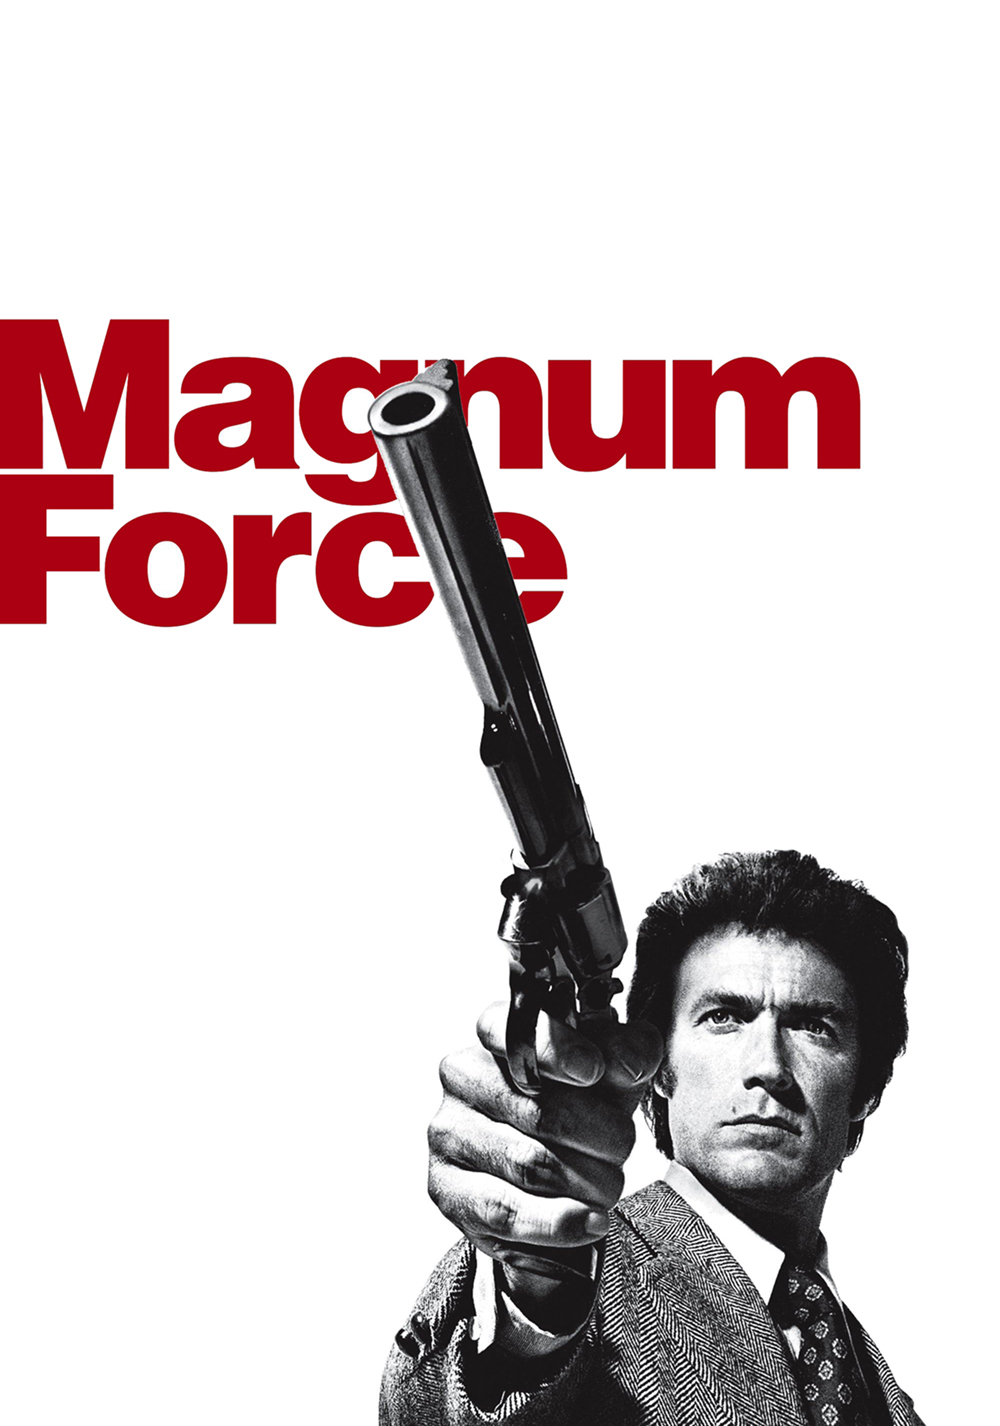 Magnum Force Images. 